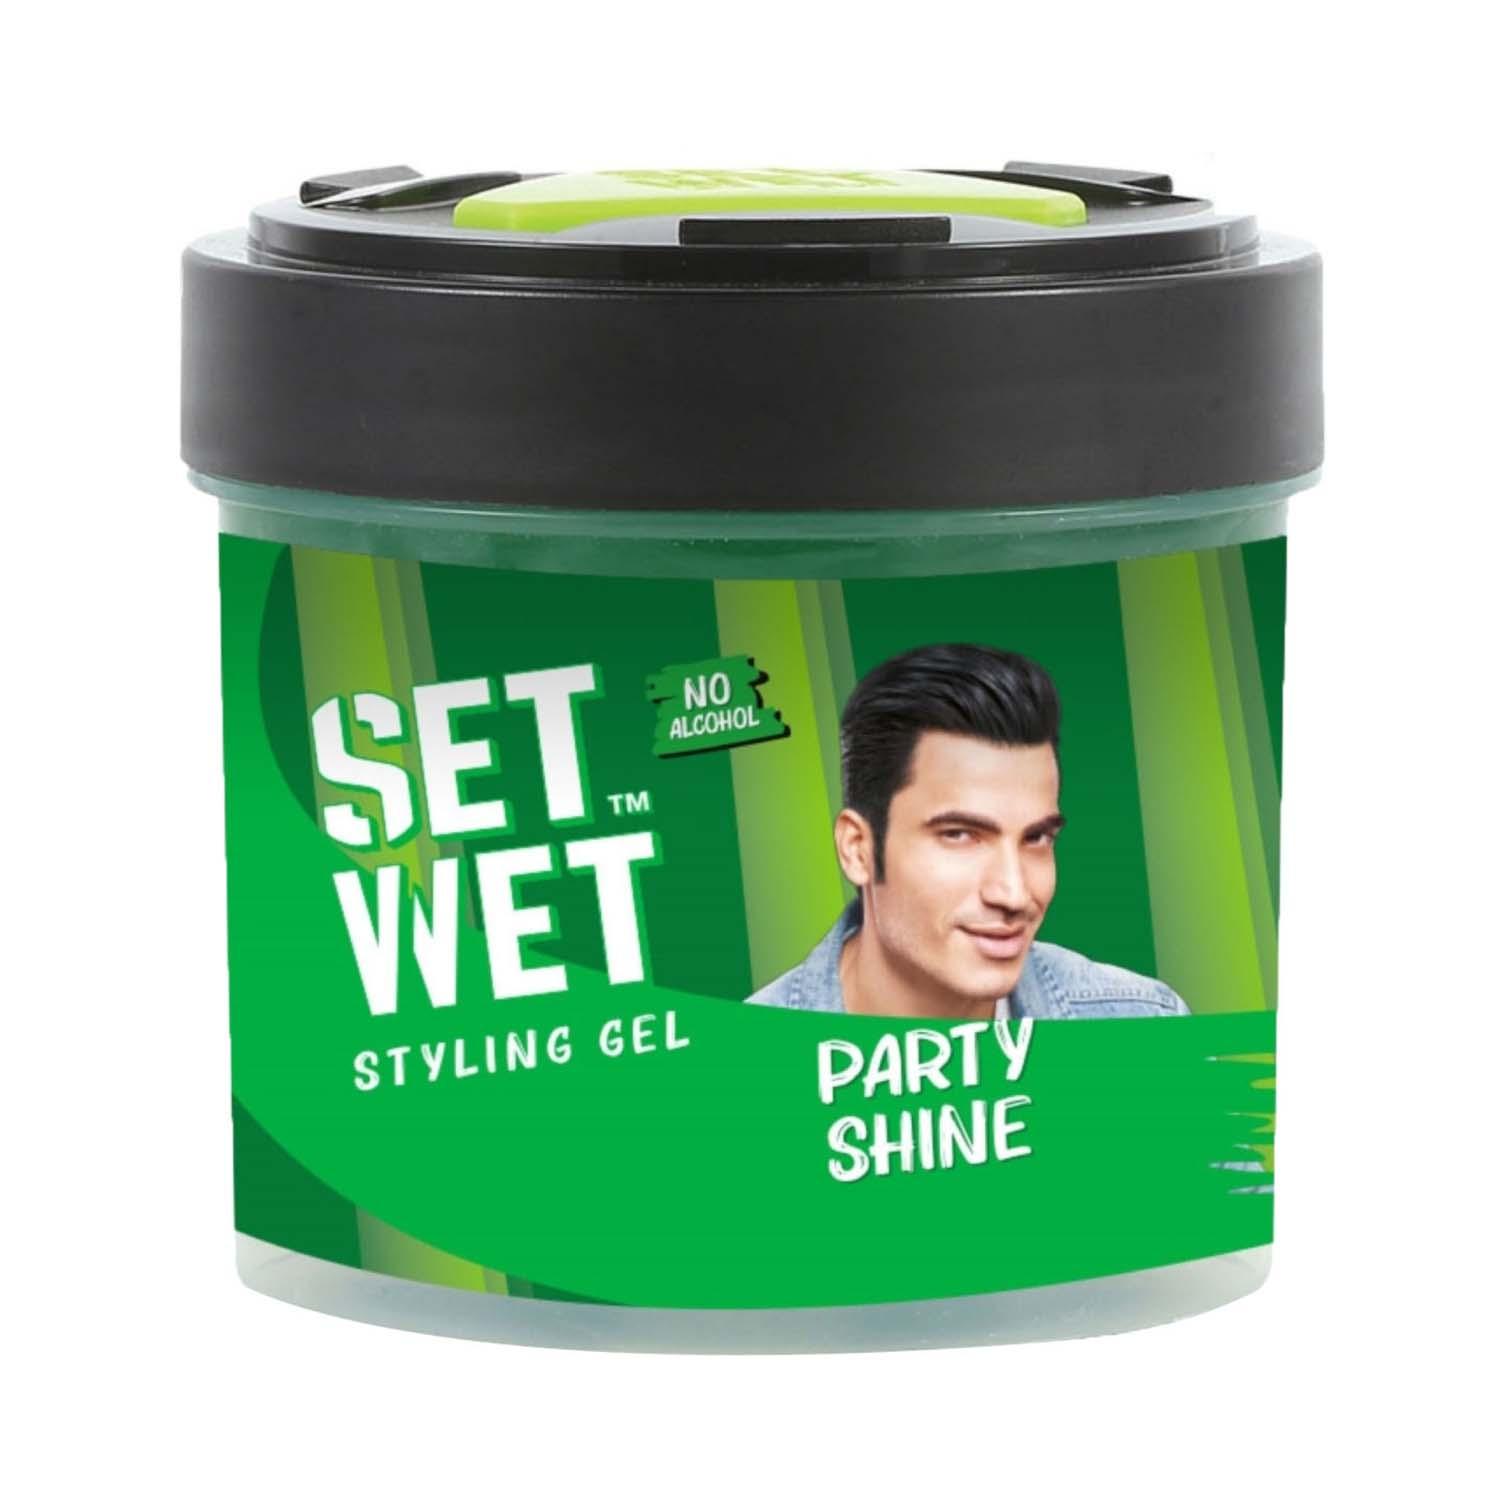 Set Wet Styling Hair Party Shine Gel for Men (250 g)